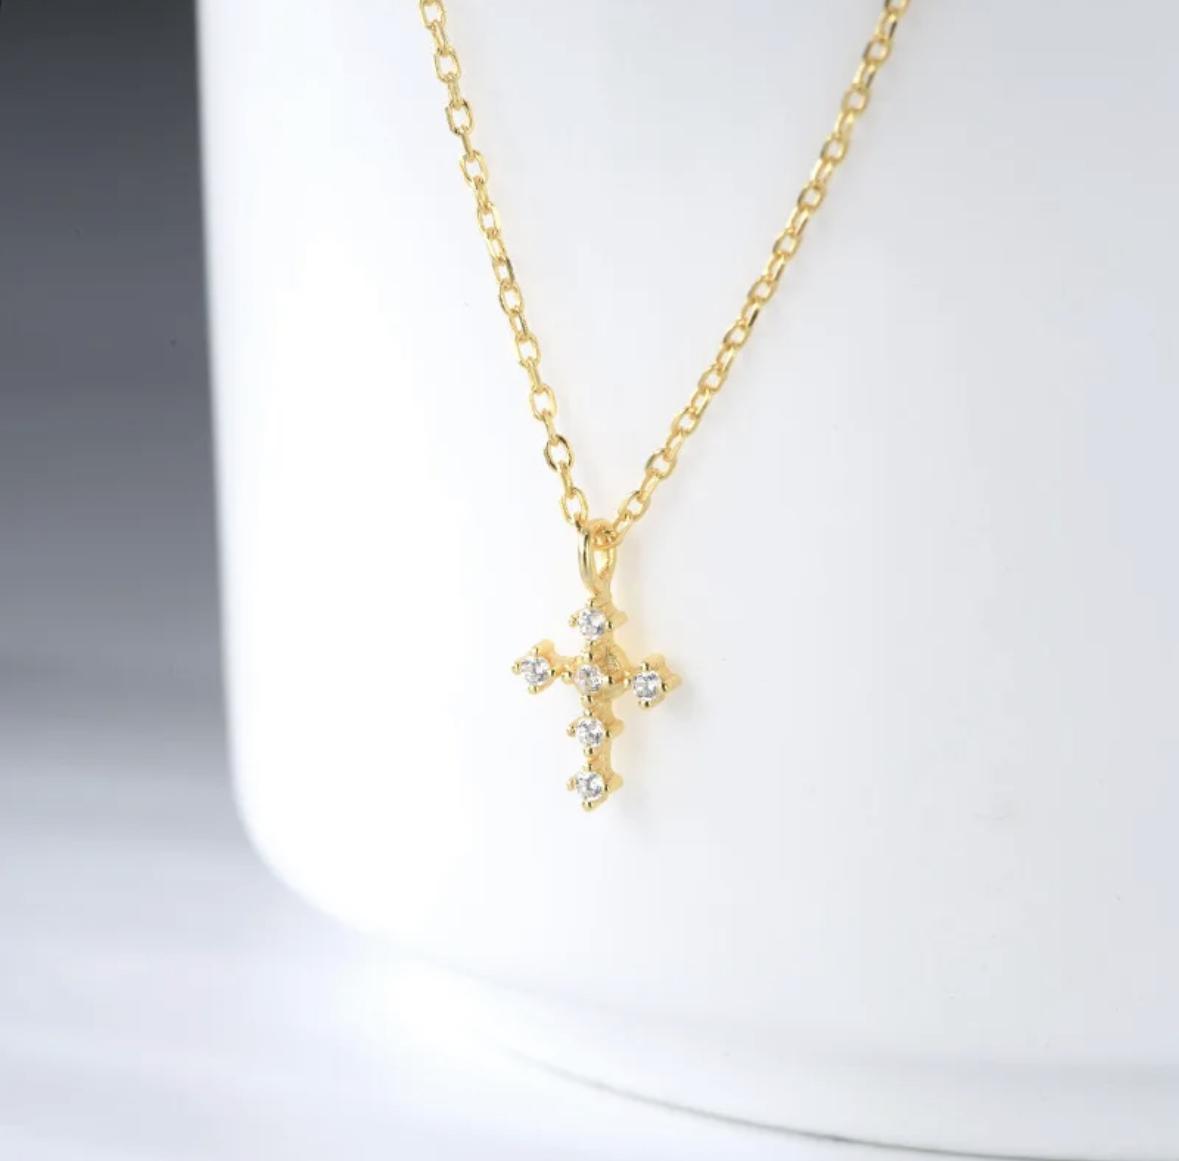 Tiny Cross Necklace